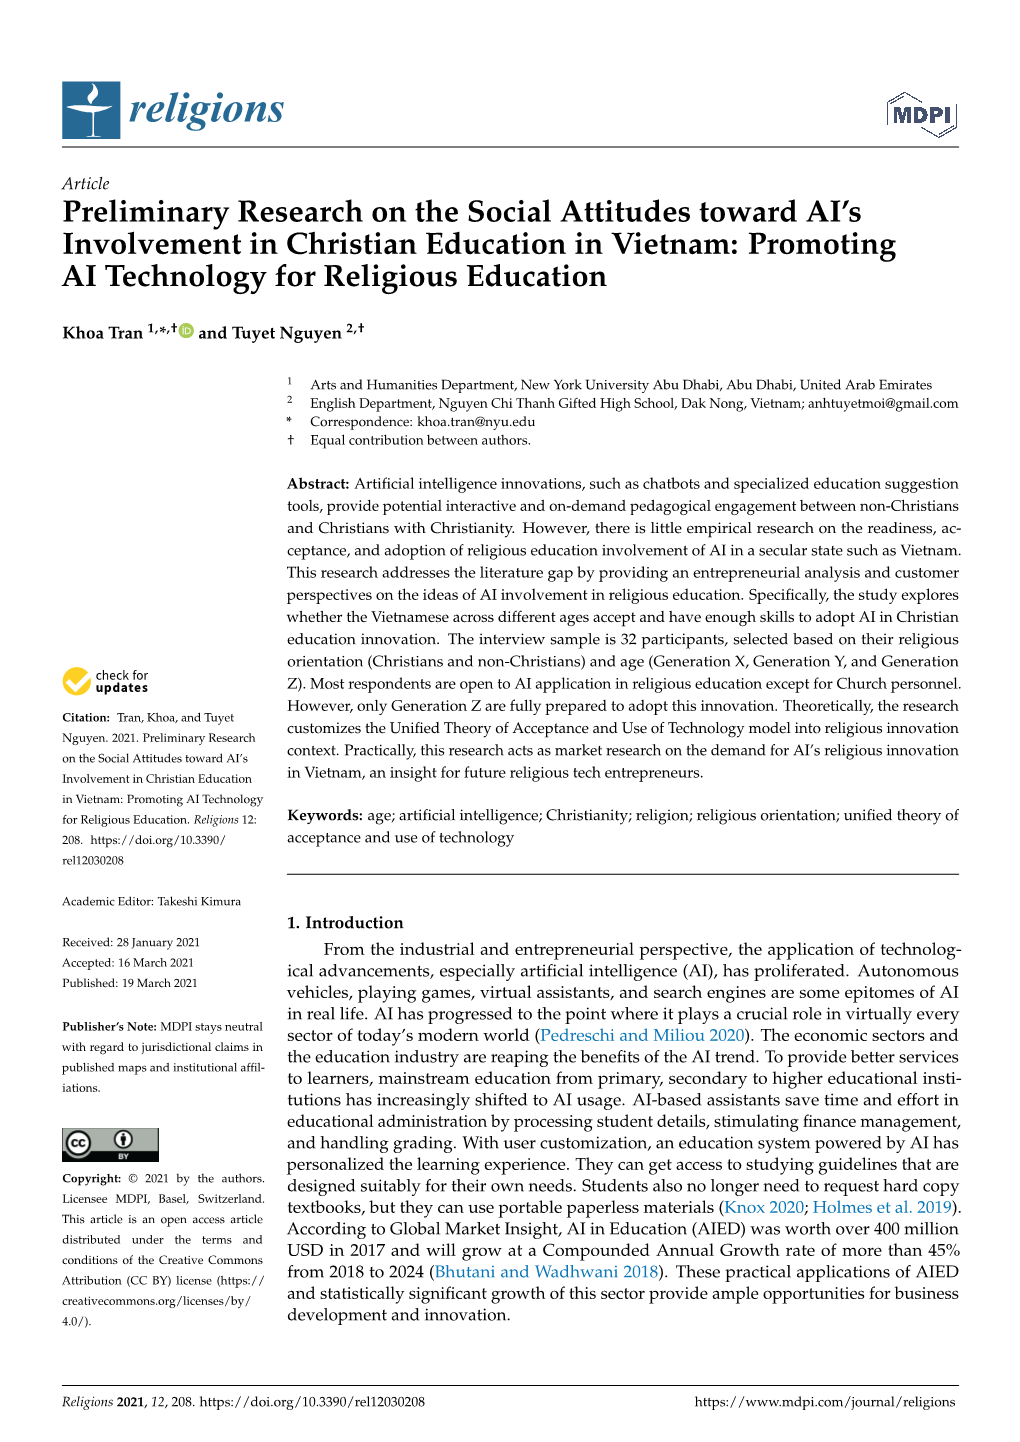 Preliminary Research on the Social Attitudes Toward AI's Involvement in Christian Education in Vietnam